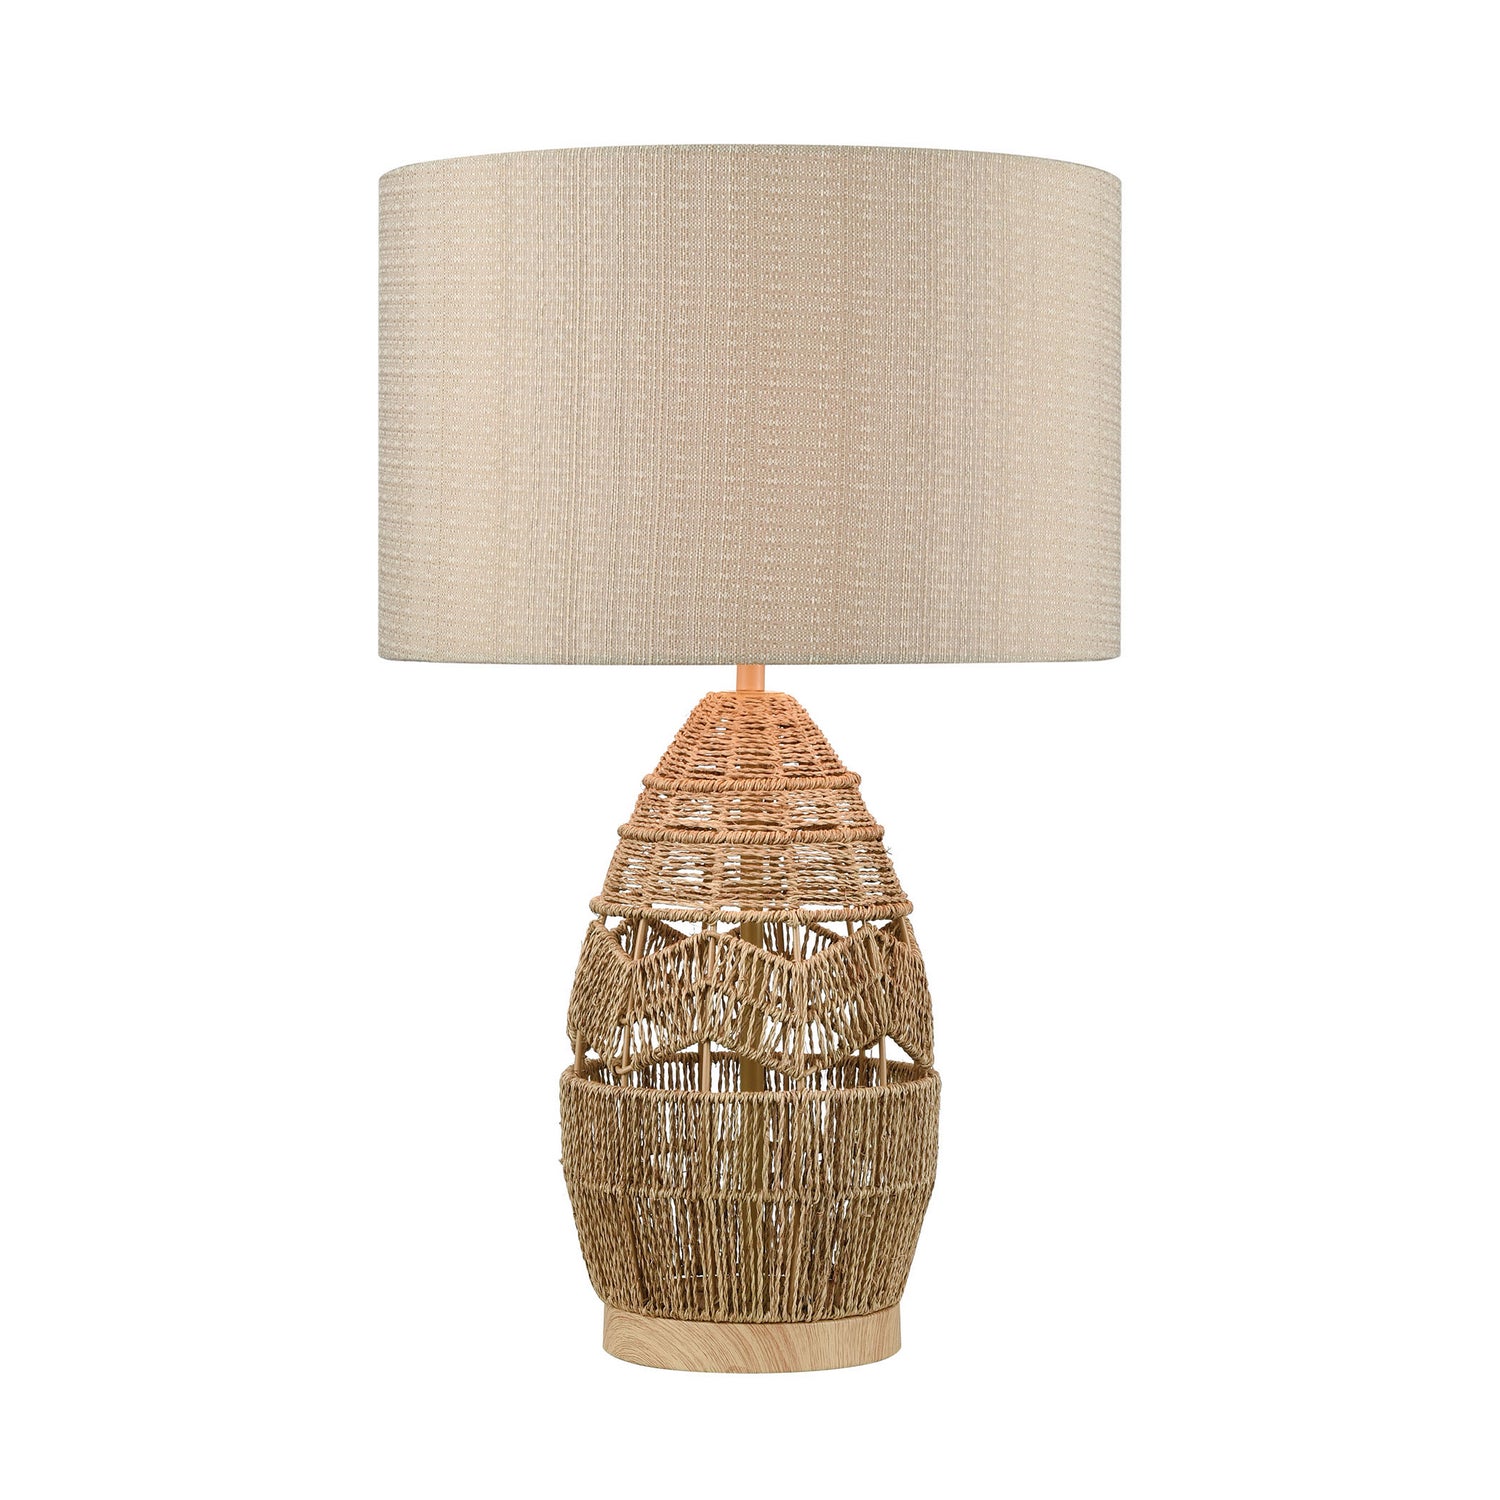 ELK Home - D4553 - One Light Table Lamp - Husk - Natural